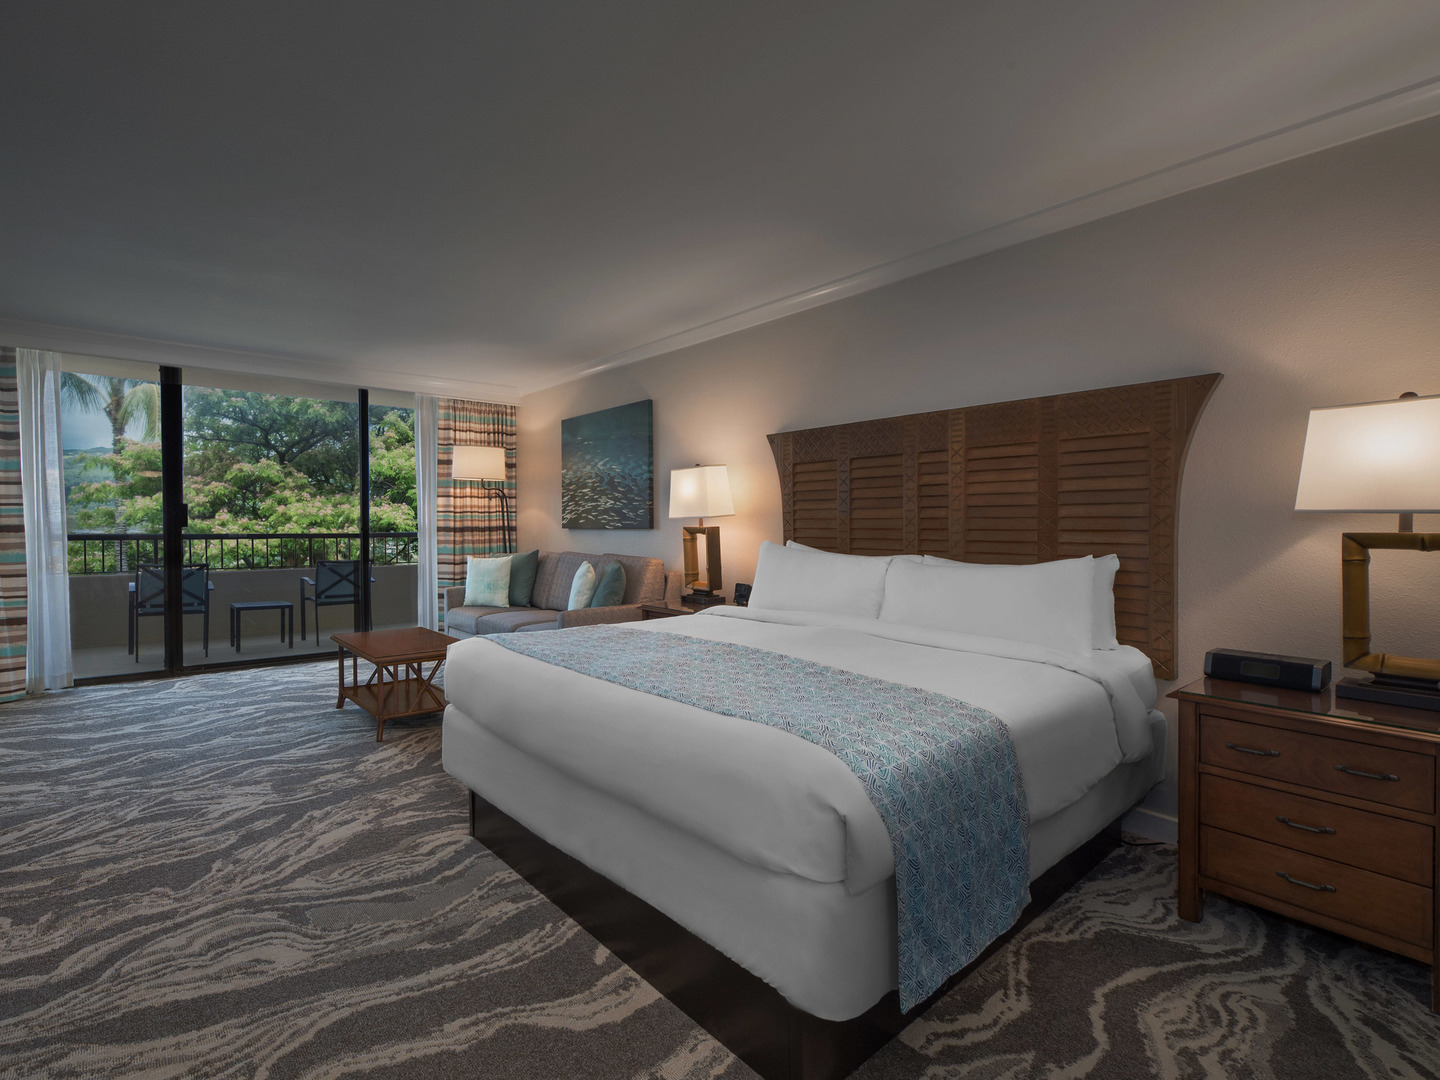 Marriott's Maui Ocean Club - Molokai, Maui, and Lanai Towers Villa Guest Bedroom. Marriott's Maui Ocean Club - Molokai, Maui, and Lanai Towers is located in Lāhainā, Maui, Hawai‘i United States.